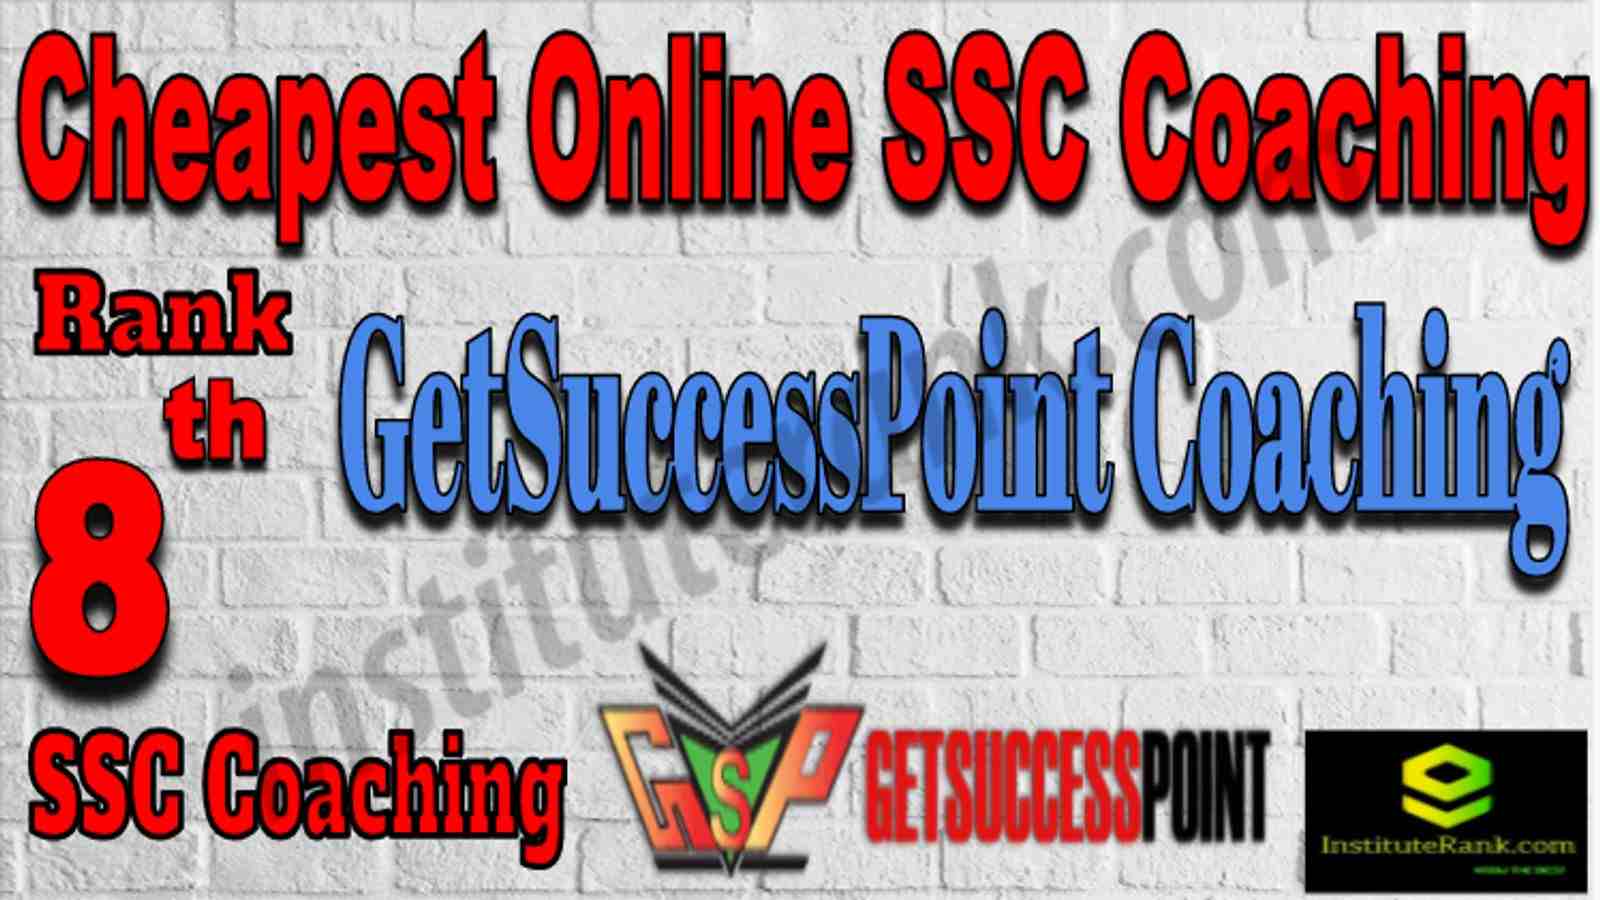 Rank 8 Cheapest Online SSC Coaching